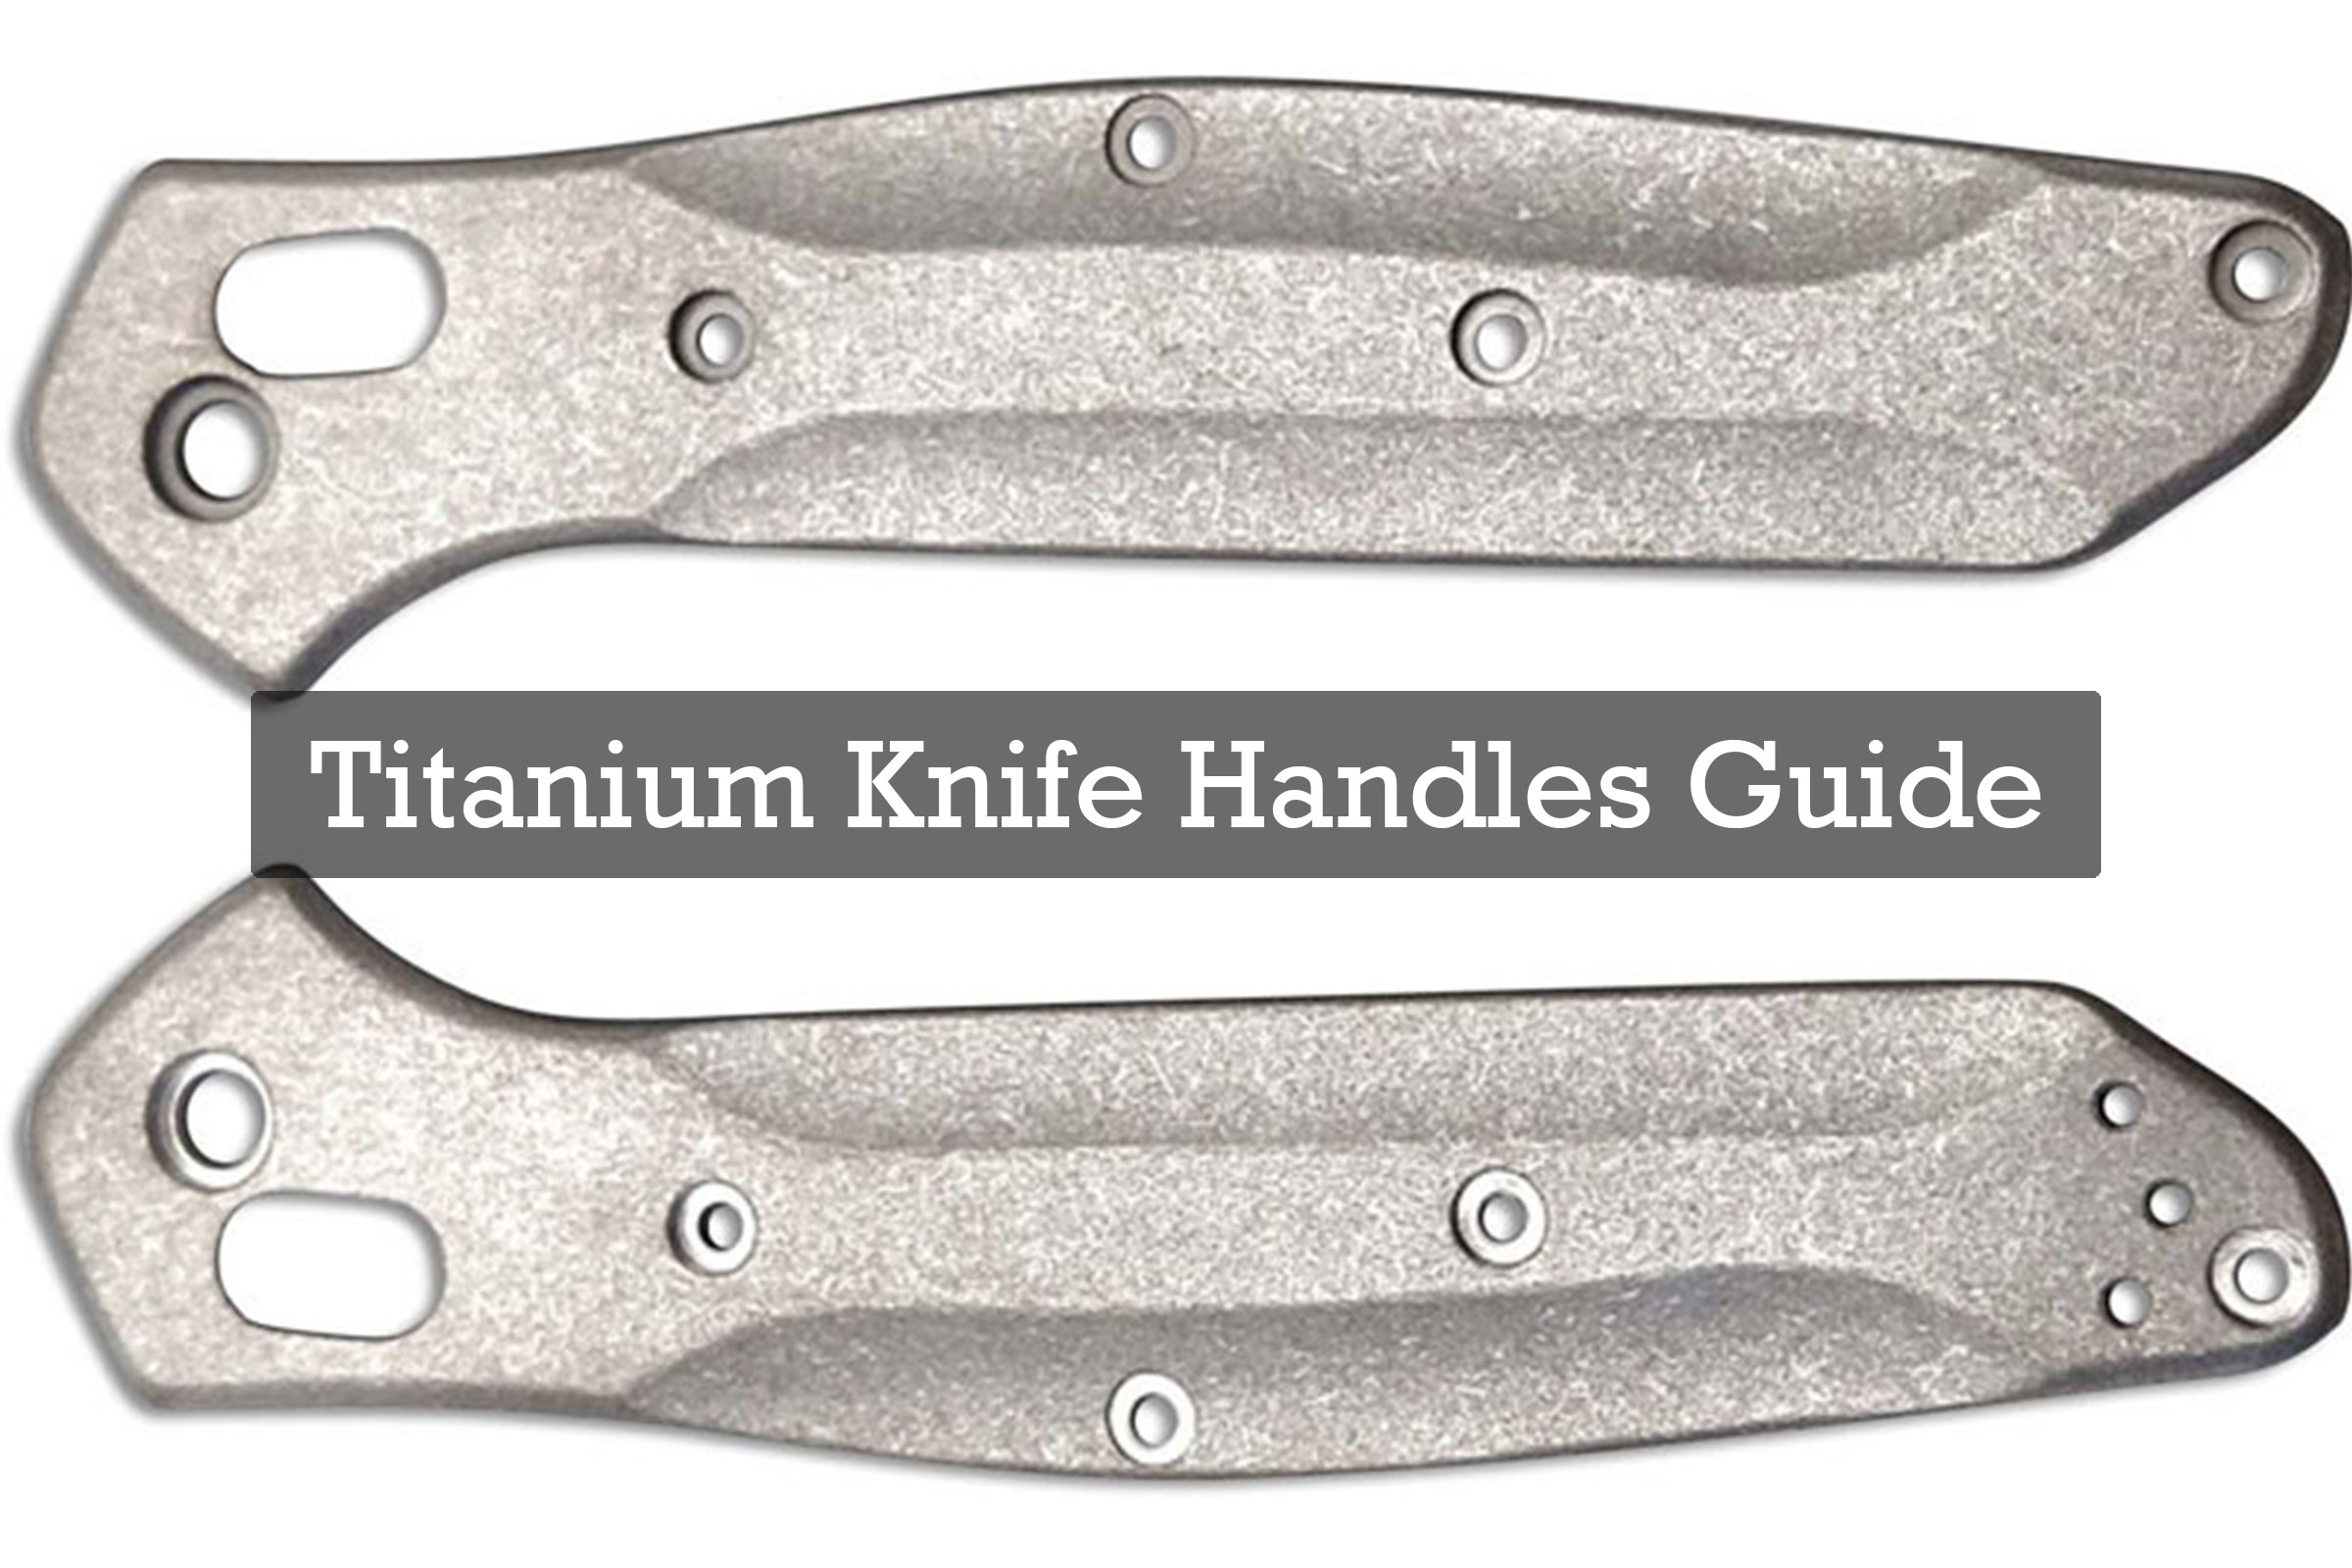 Titanium Knife handle guide